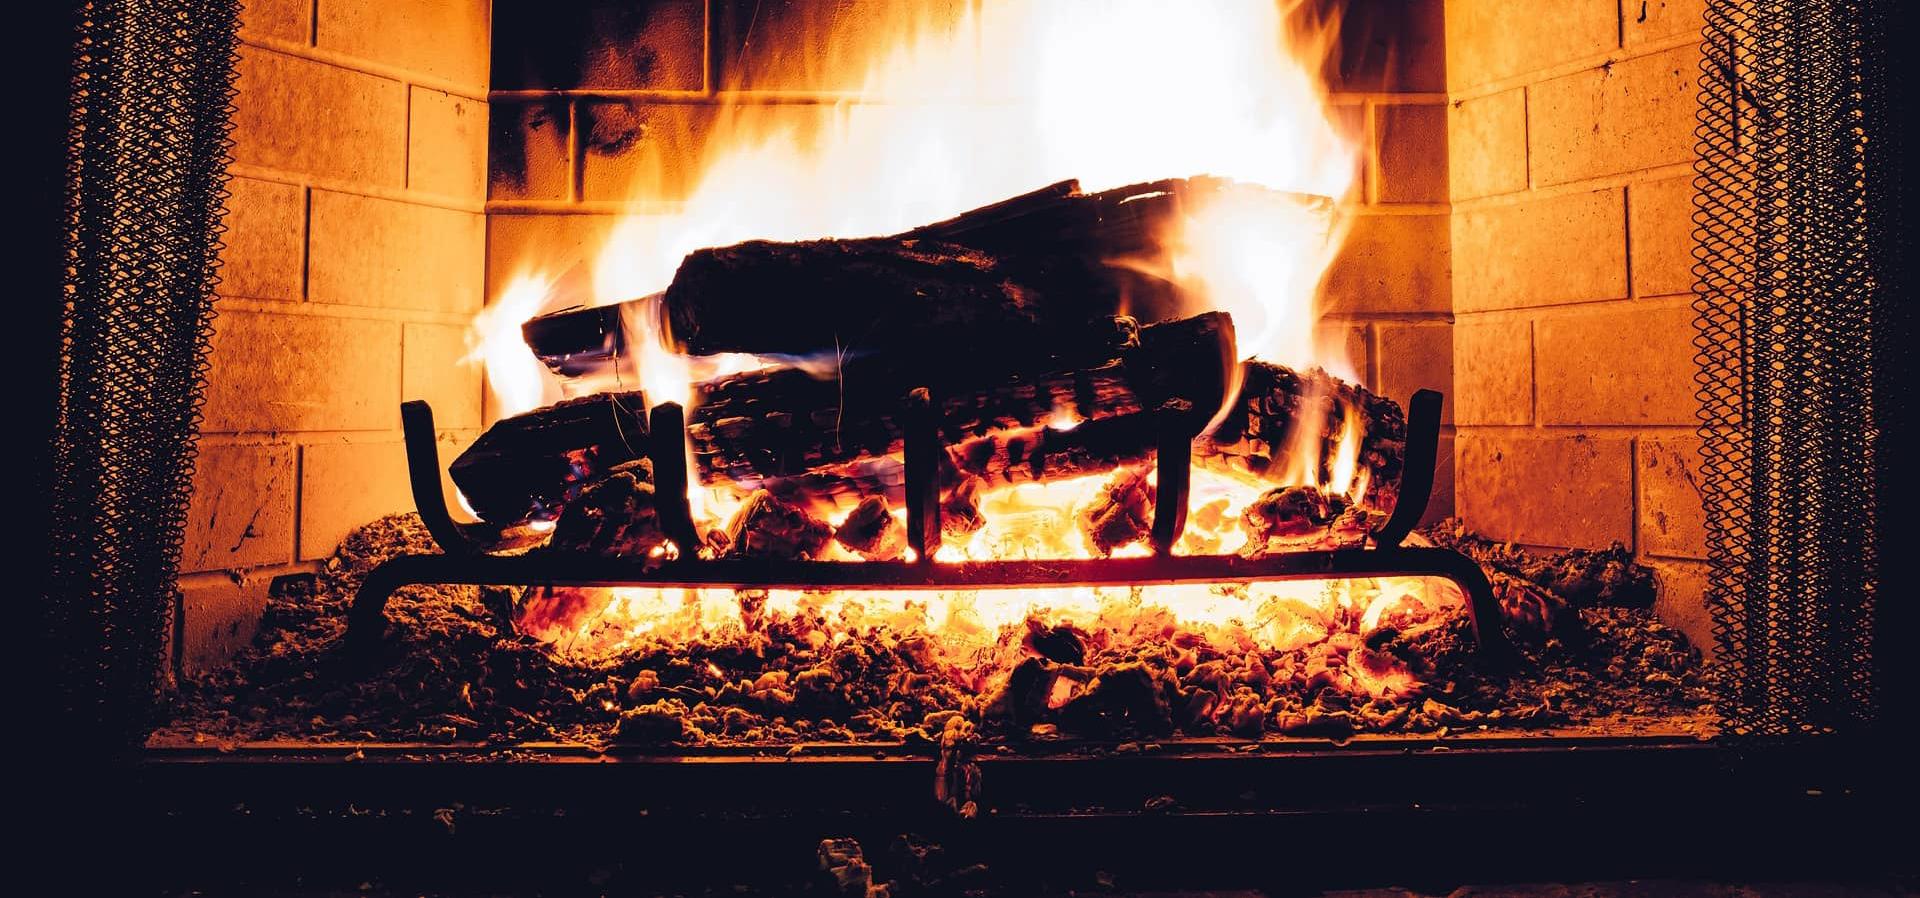 Blazing log fire in a fireplace